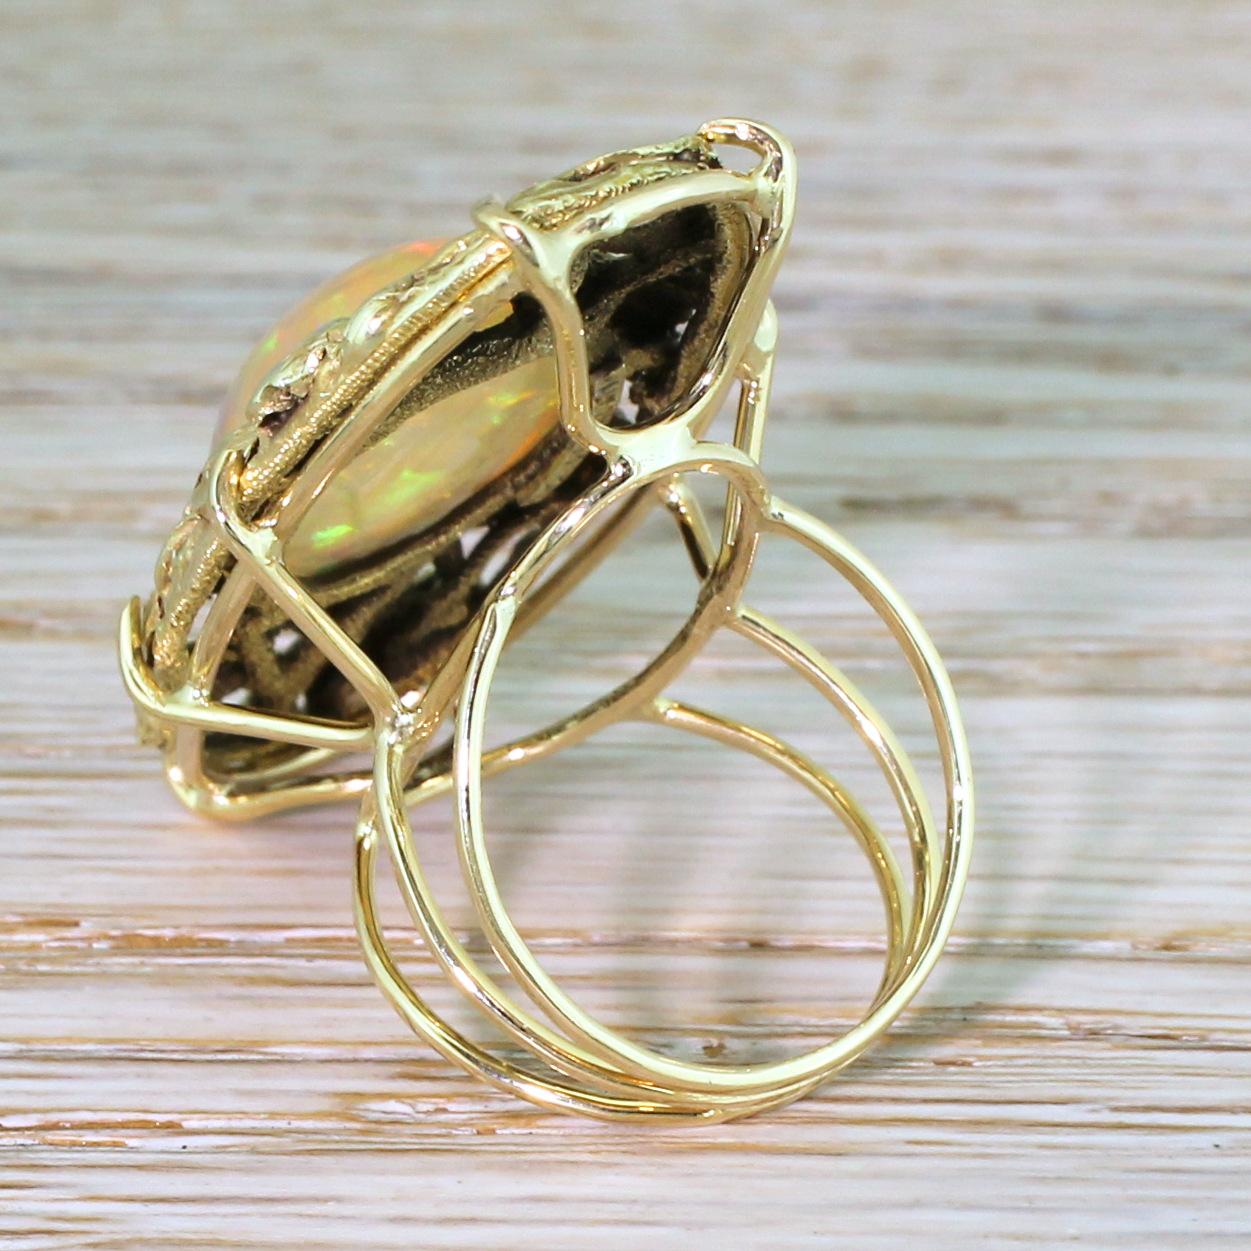 Women's Art Nouveau 8.35 Carat Opal Foliate Ring